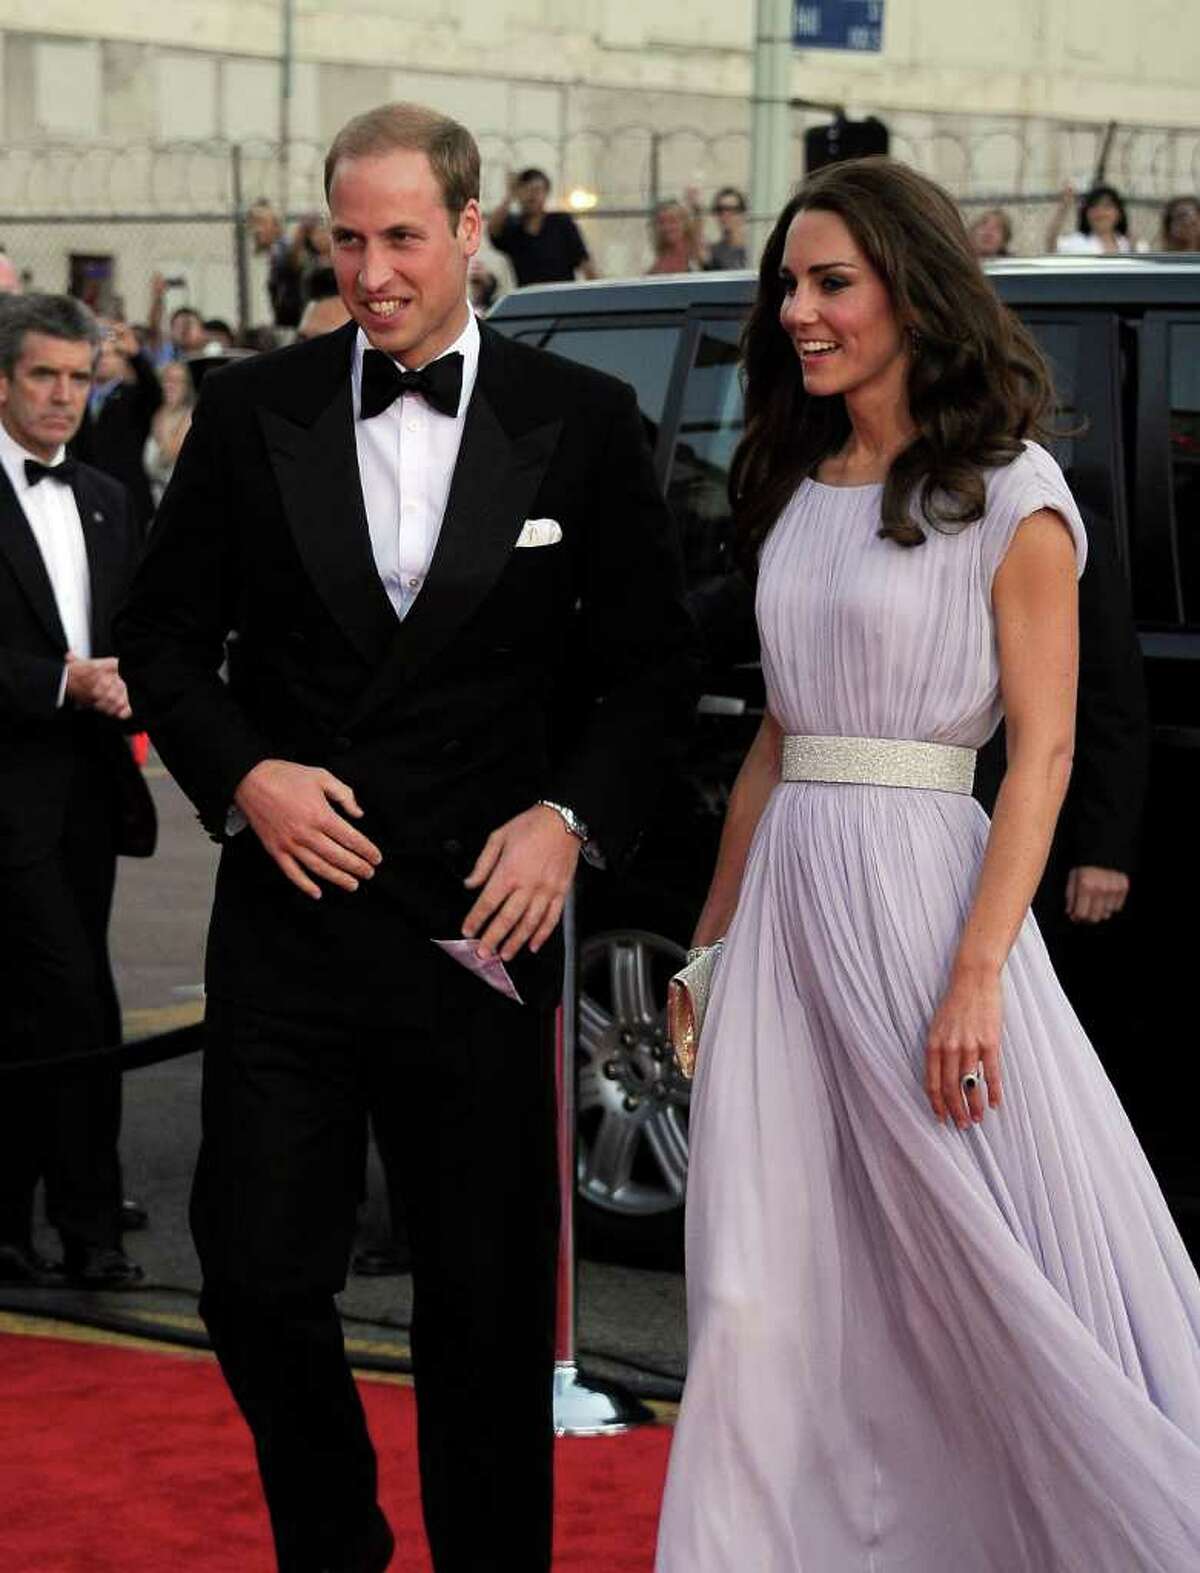 Prince William, Duke of Cambridge (L) and Catherine, Duchess of Cambridge arrive.